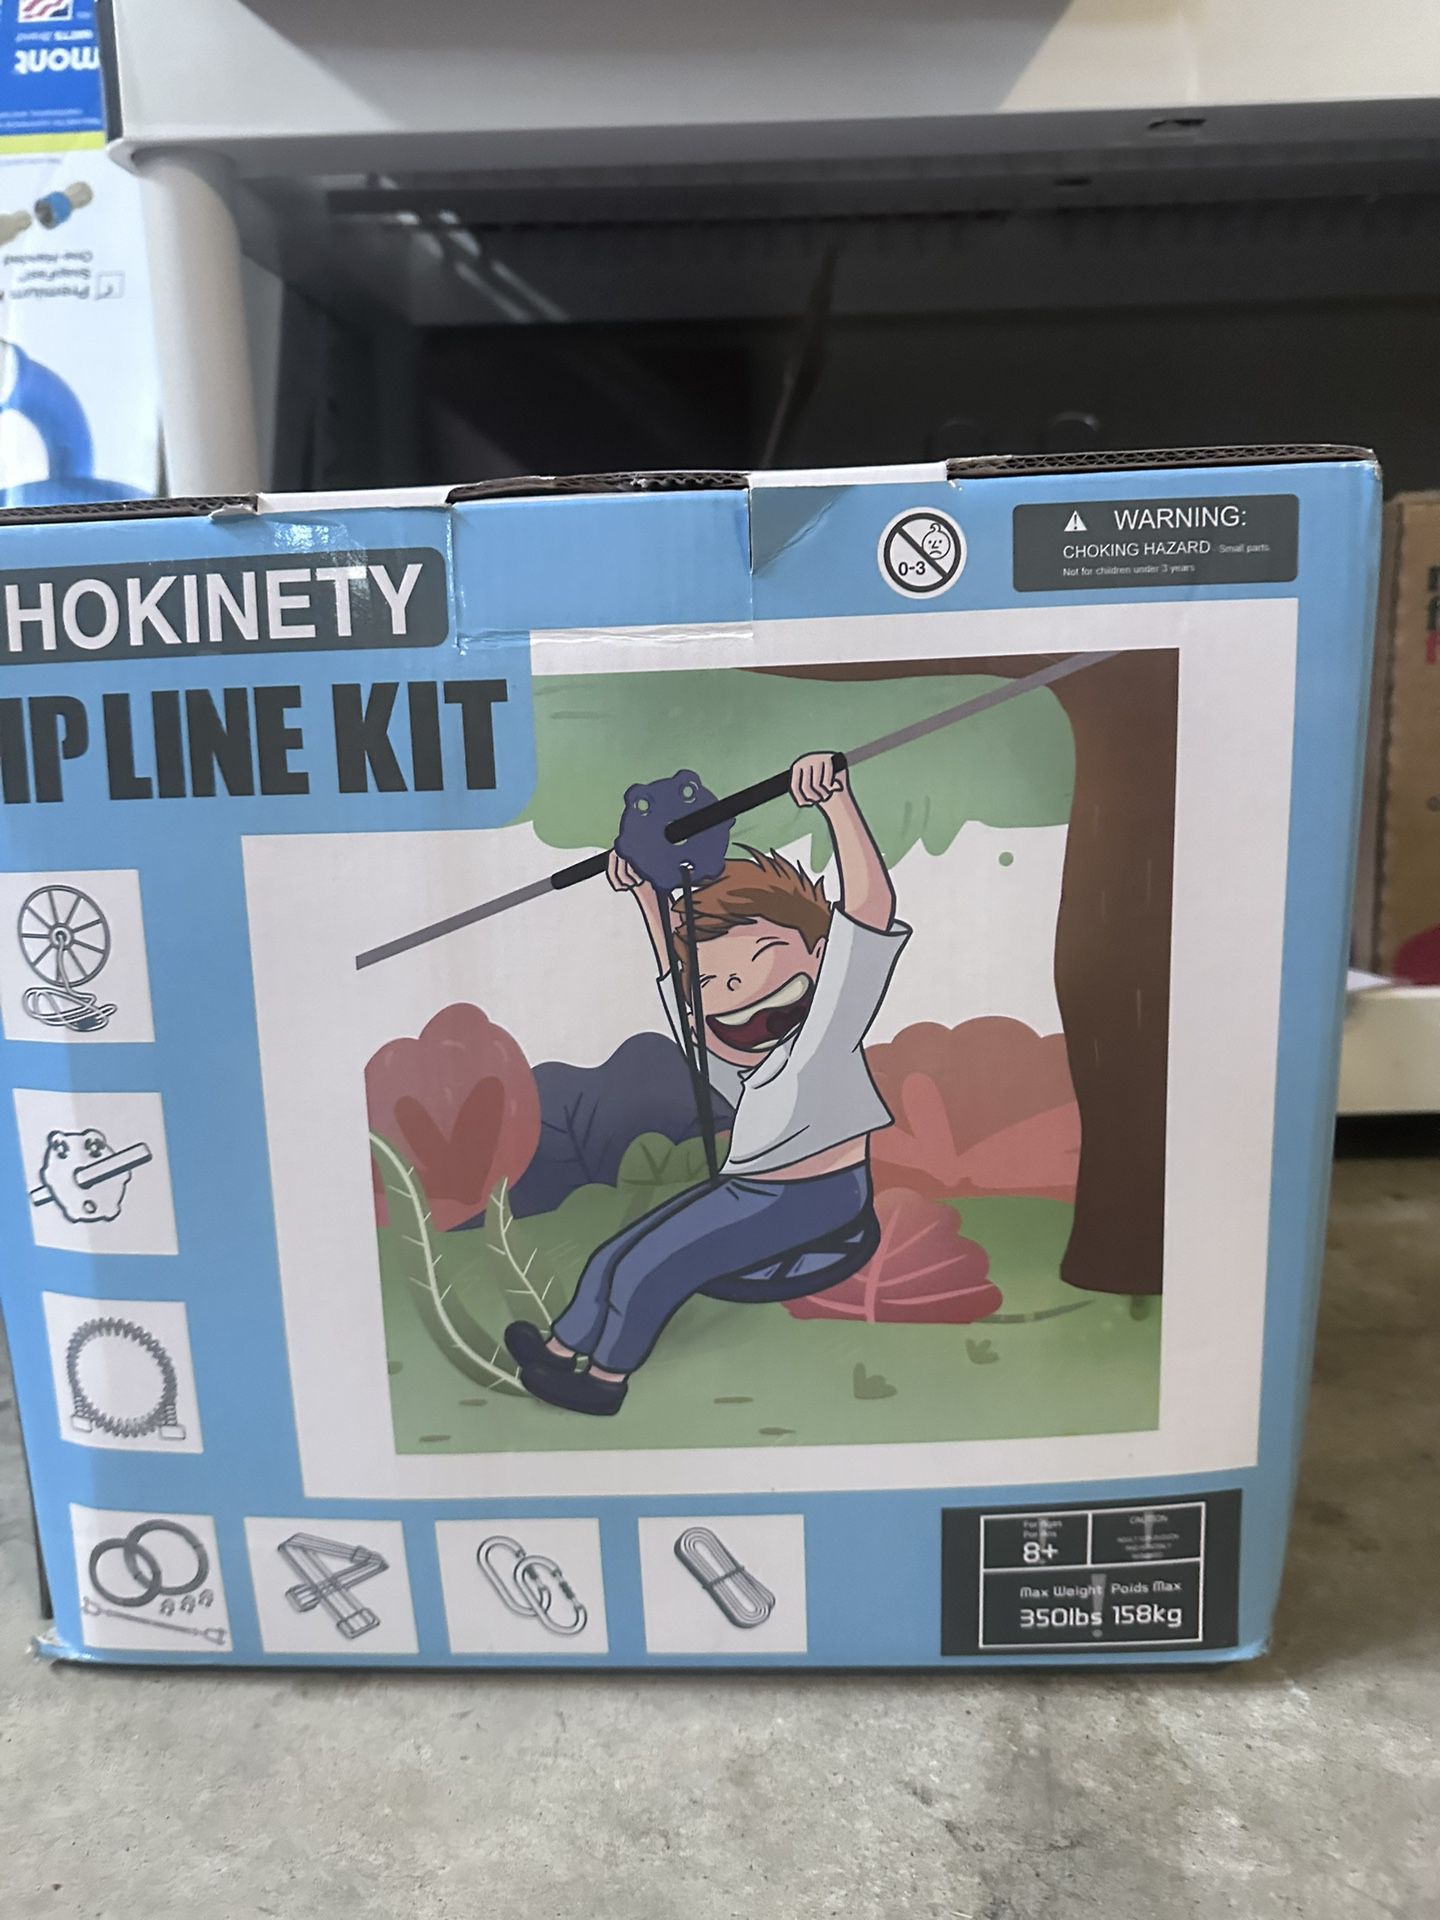 Zip line kits for hokinety